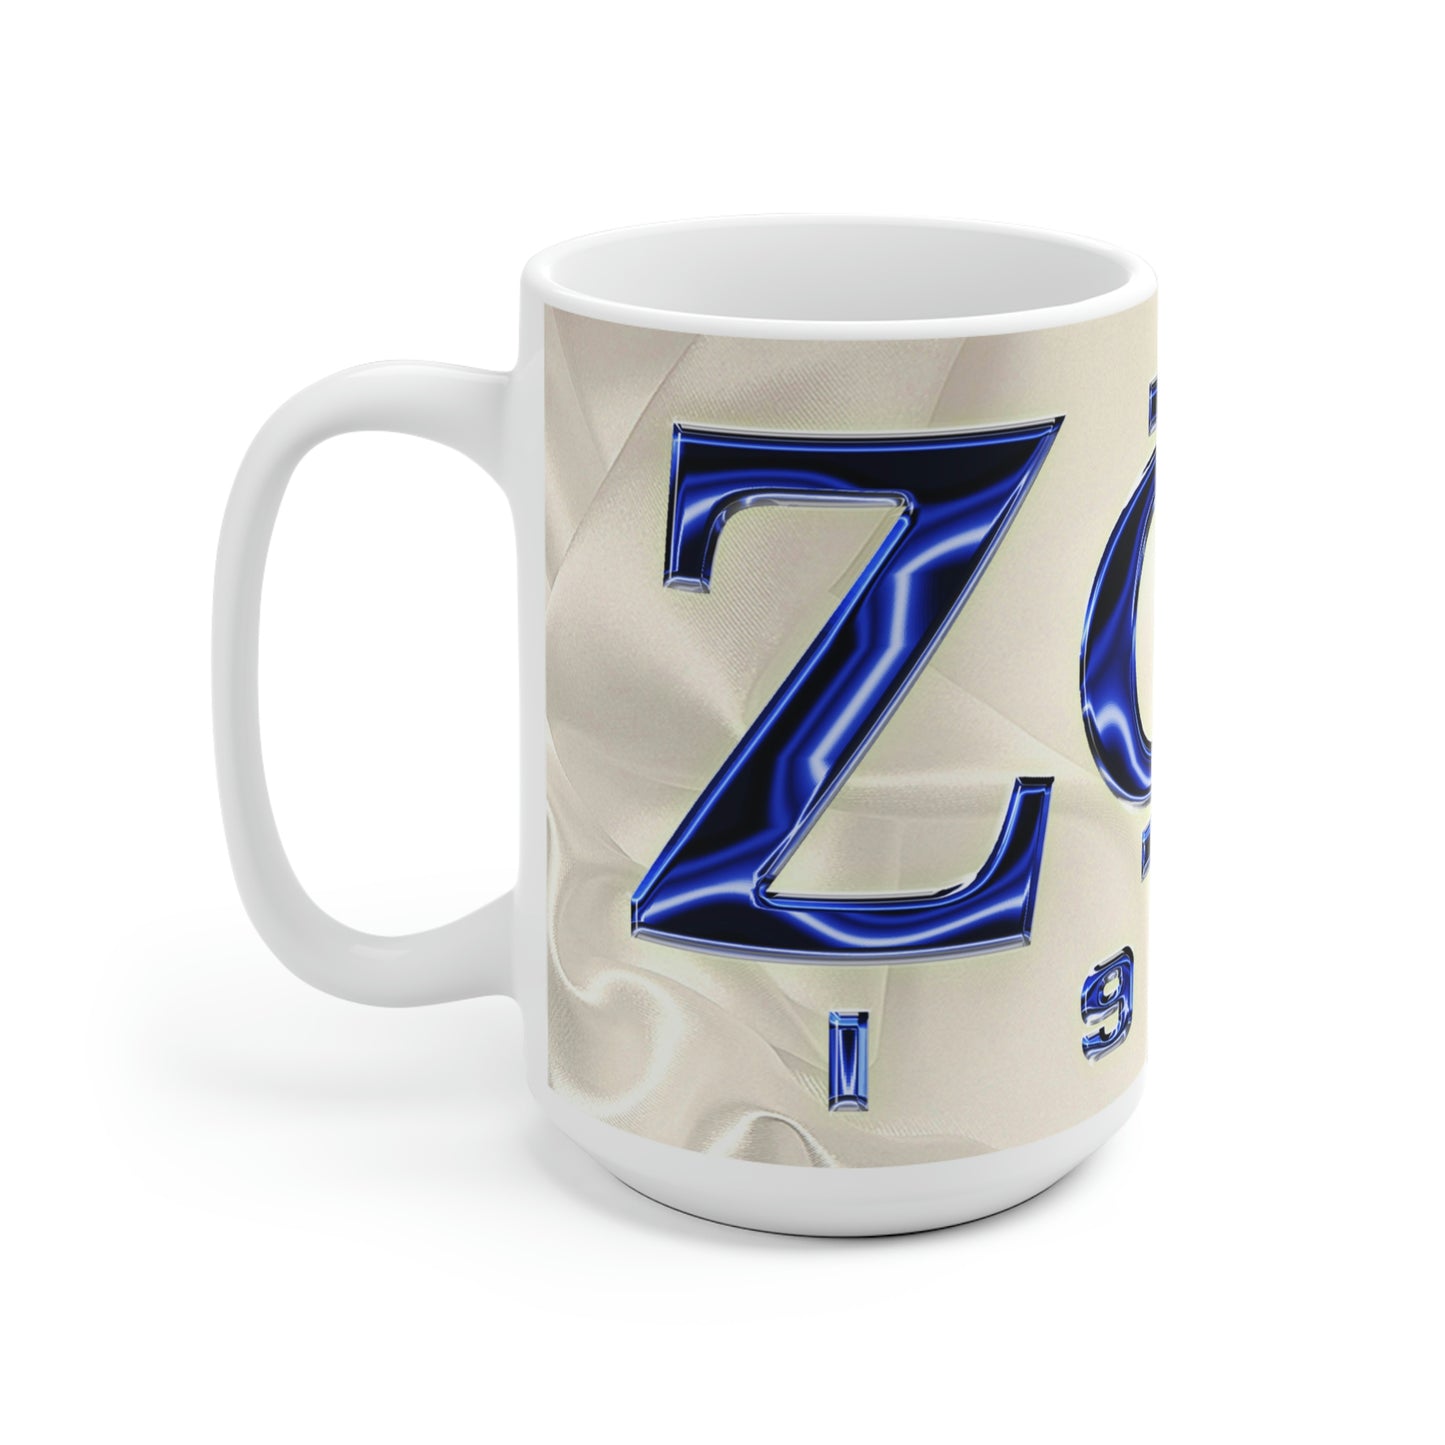 Zeta Ceramic Mug (White)